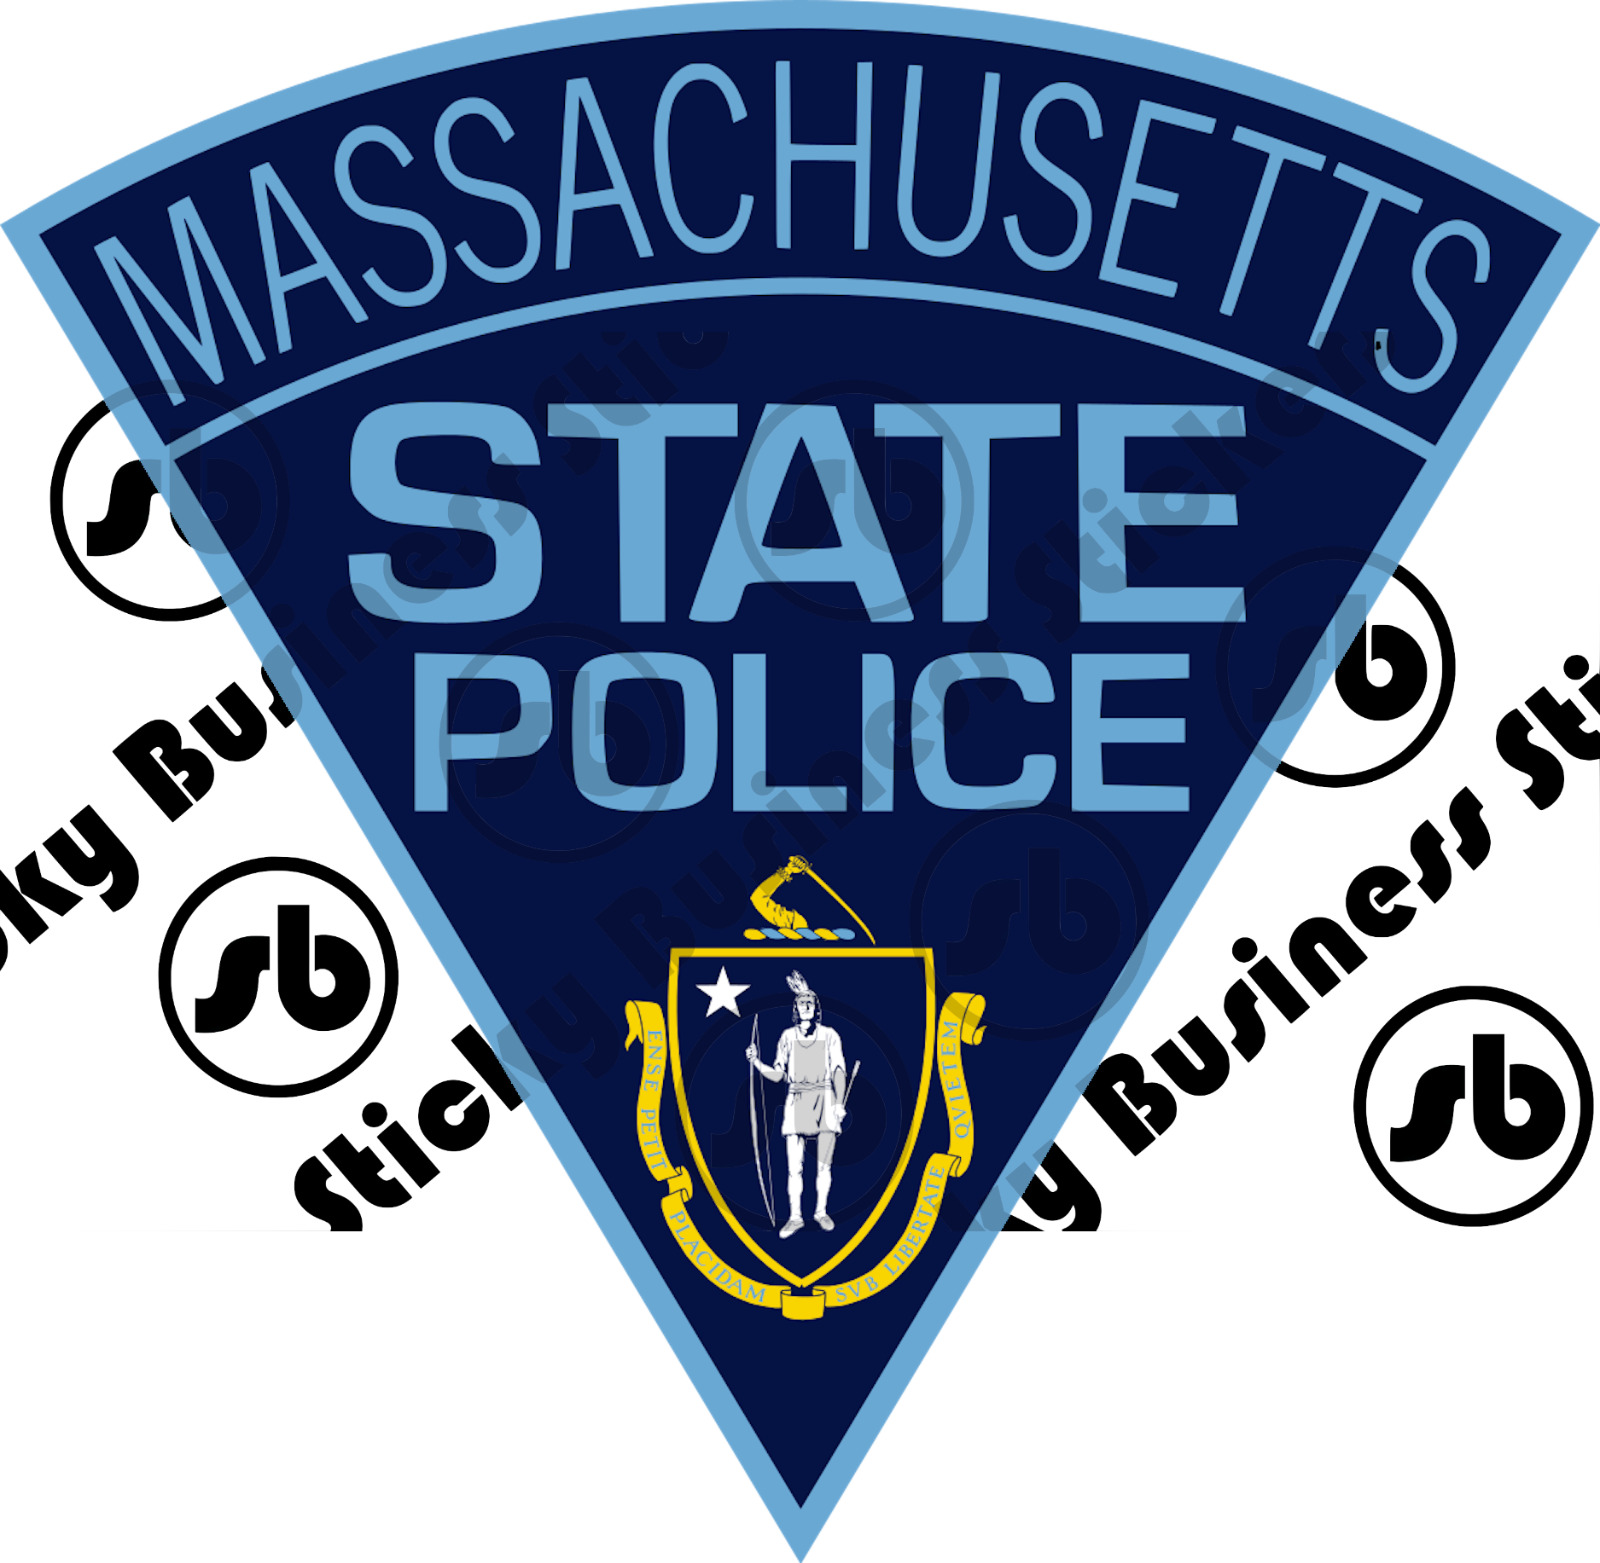 Massachusetts State Police Patch Sticker